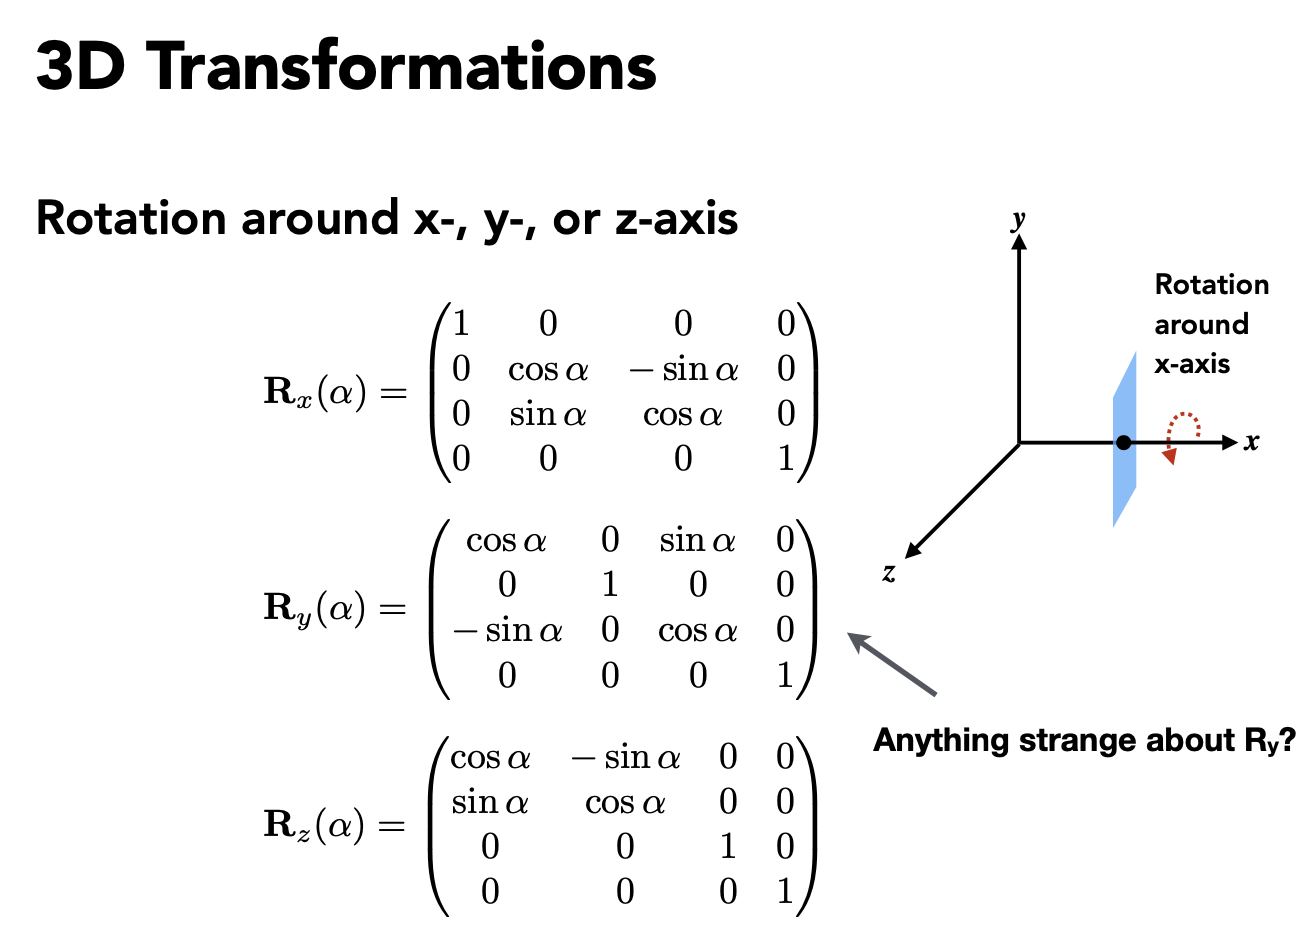 3D transformations - Rotation